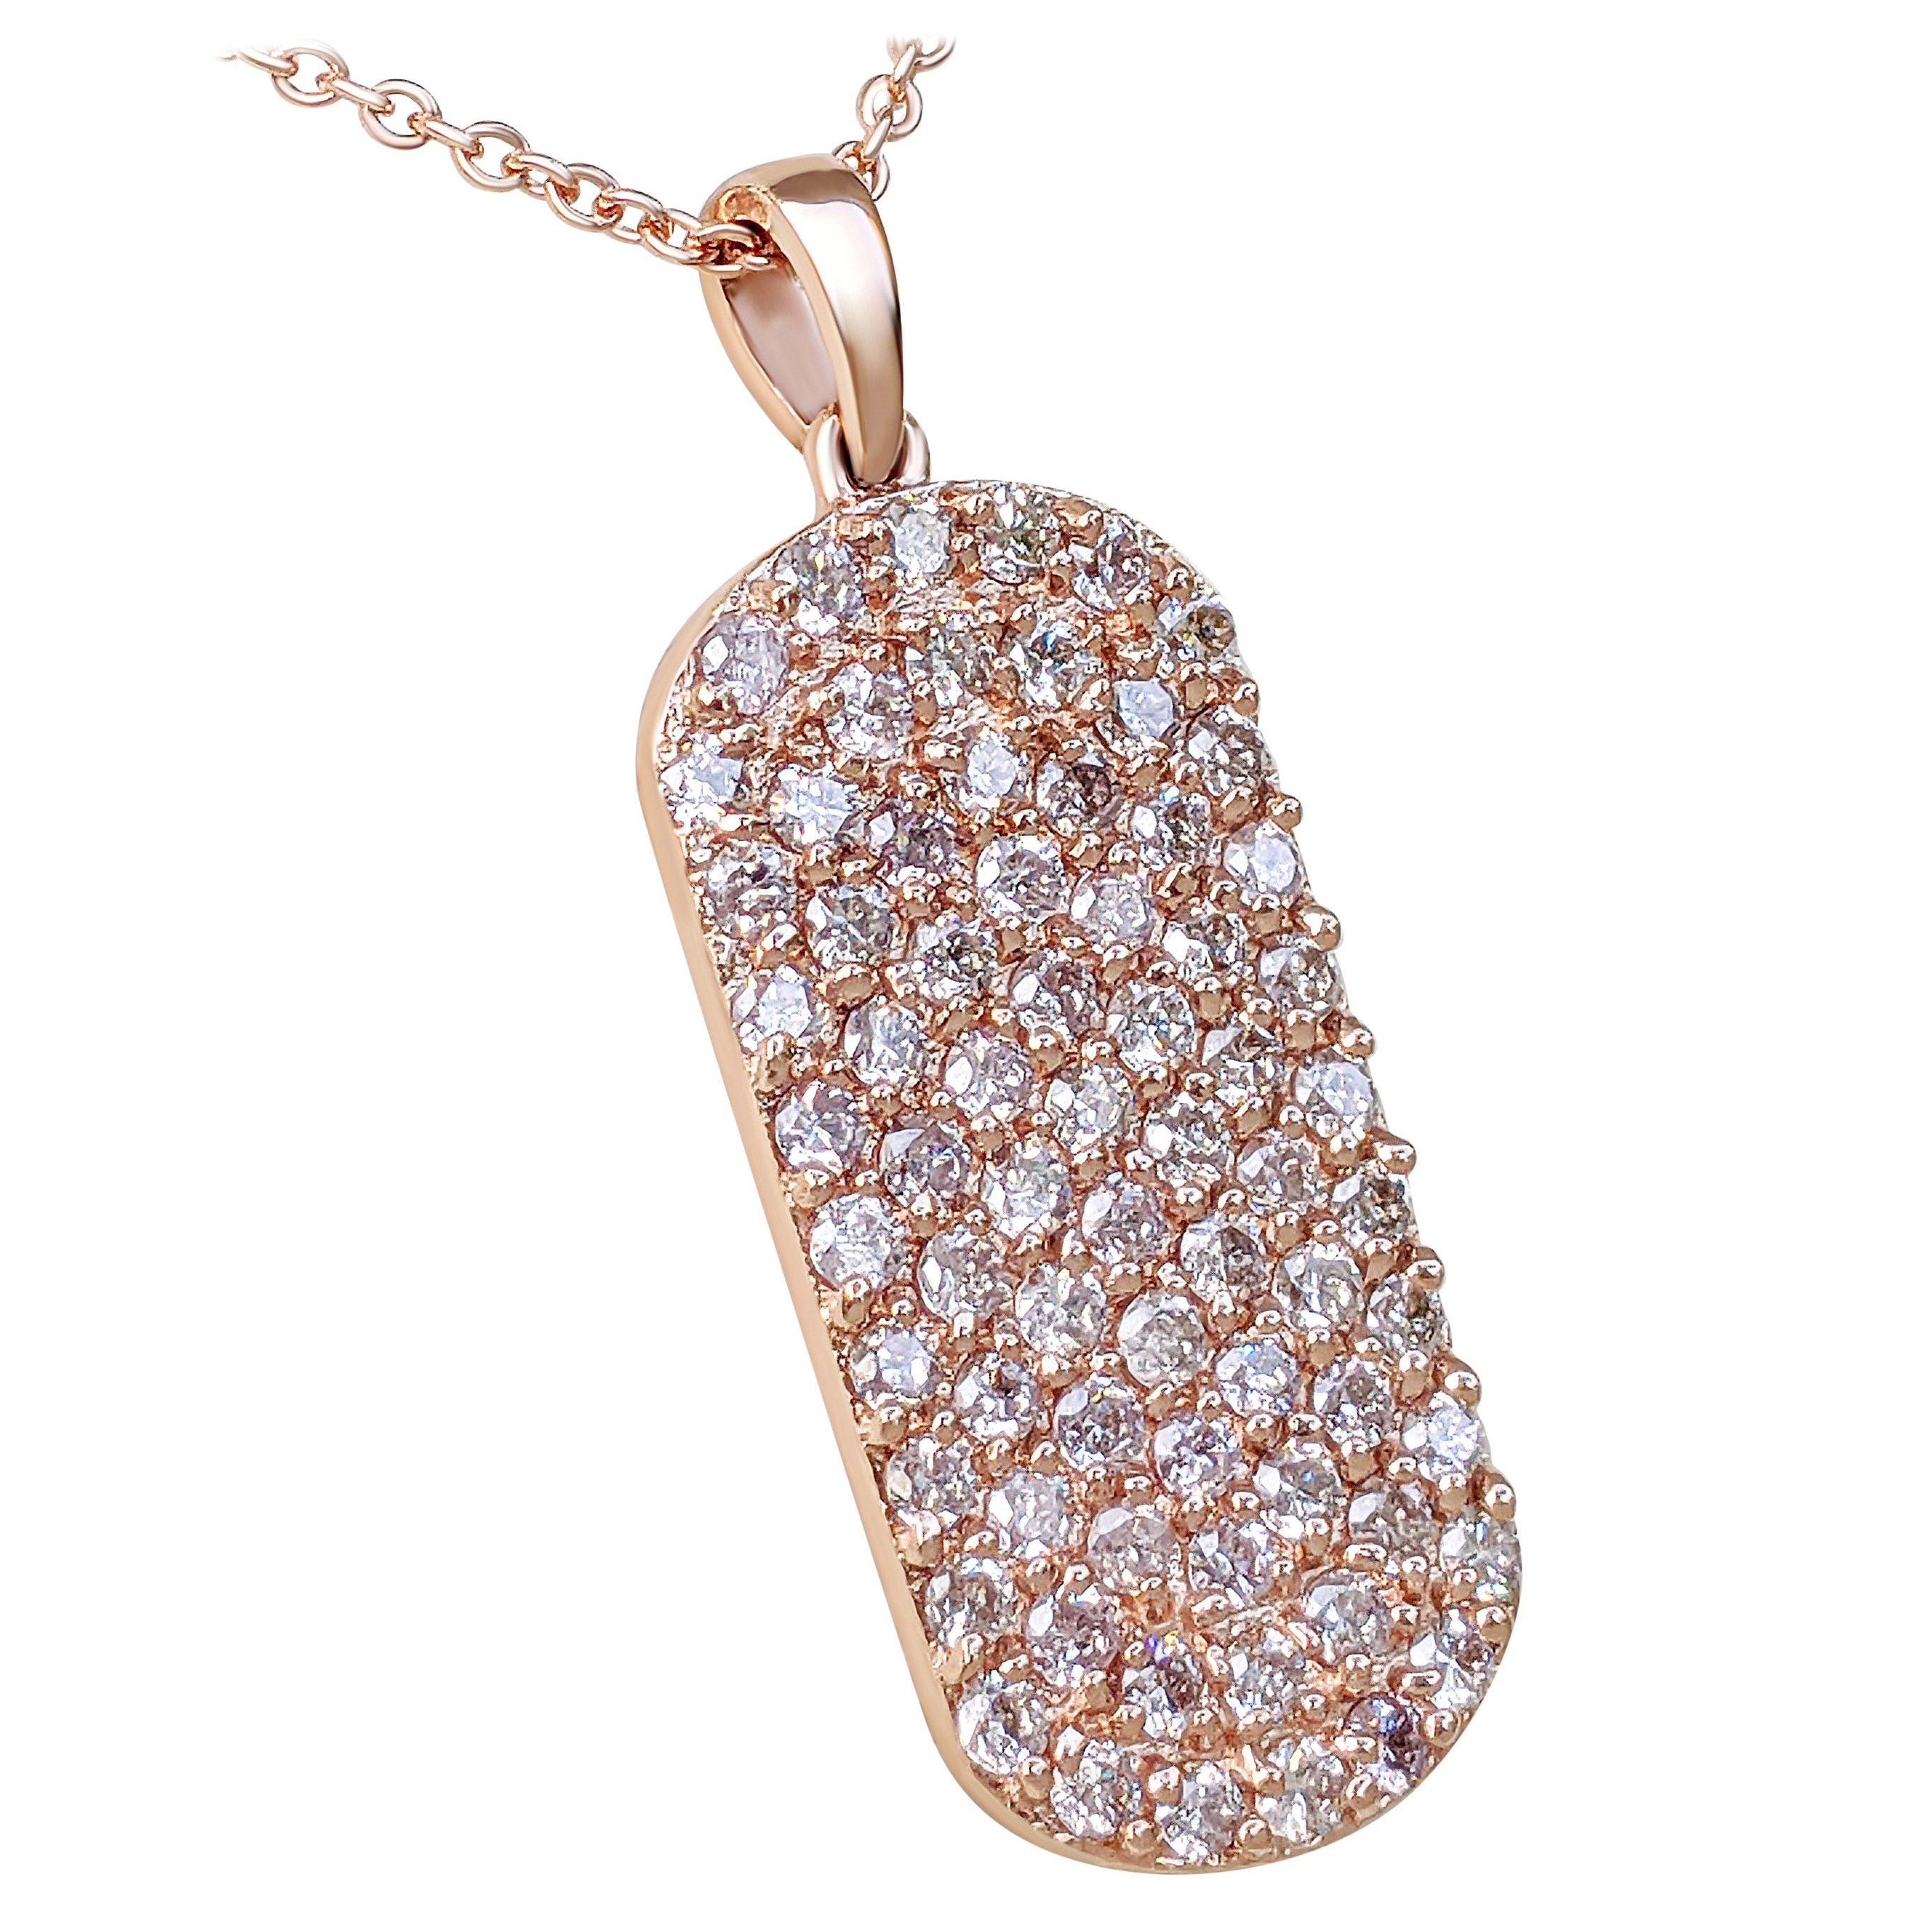 KEIN RESERVE! 1.10Ct Fancy Pink Diamond 14 kt. Gold-Anhänger-Halskette